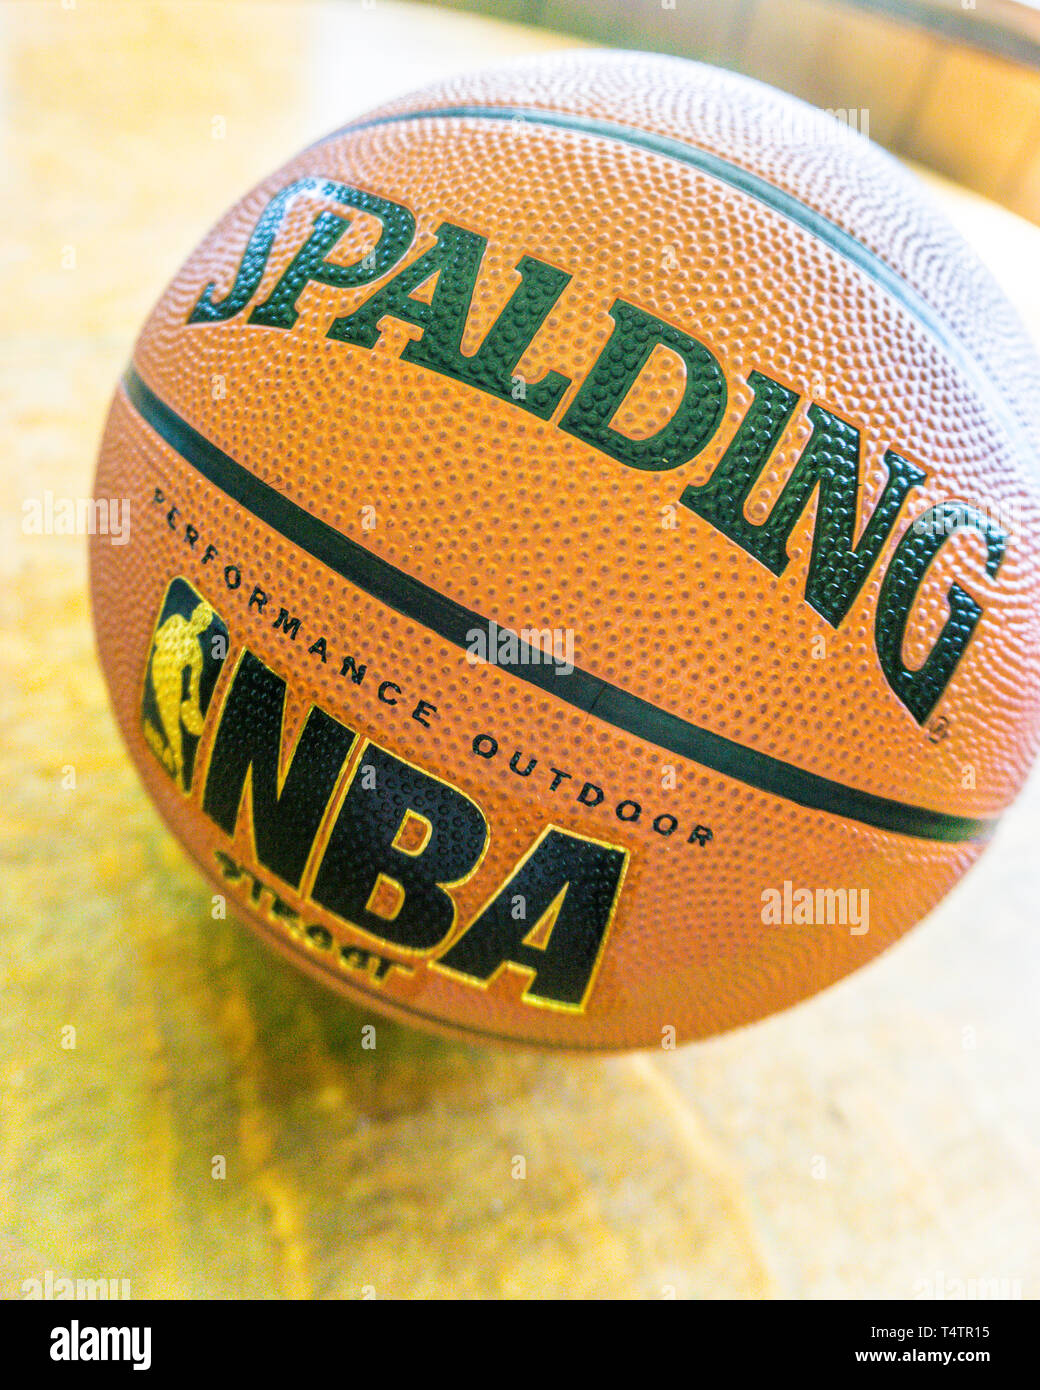 A new Spalding NBA Street basketball Stock Photo - Alamy